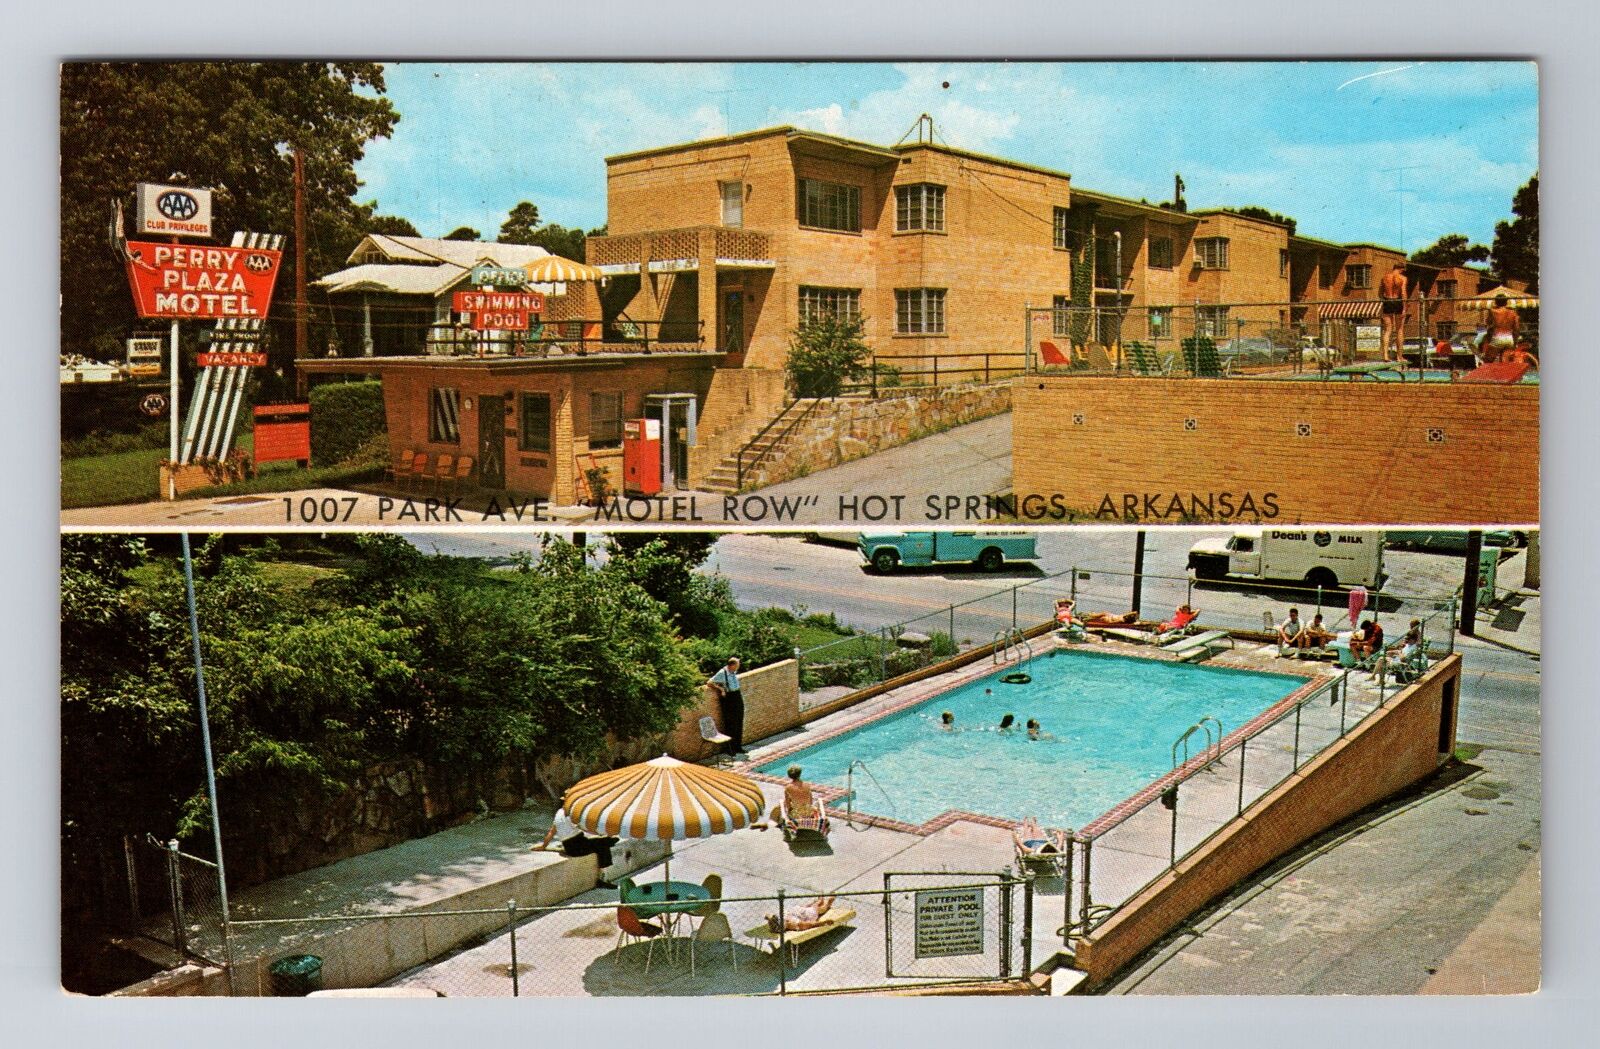 Hot Springs AR-Arkansas, Perry Plaza Motel, Advertising, Vintage Postcard